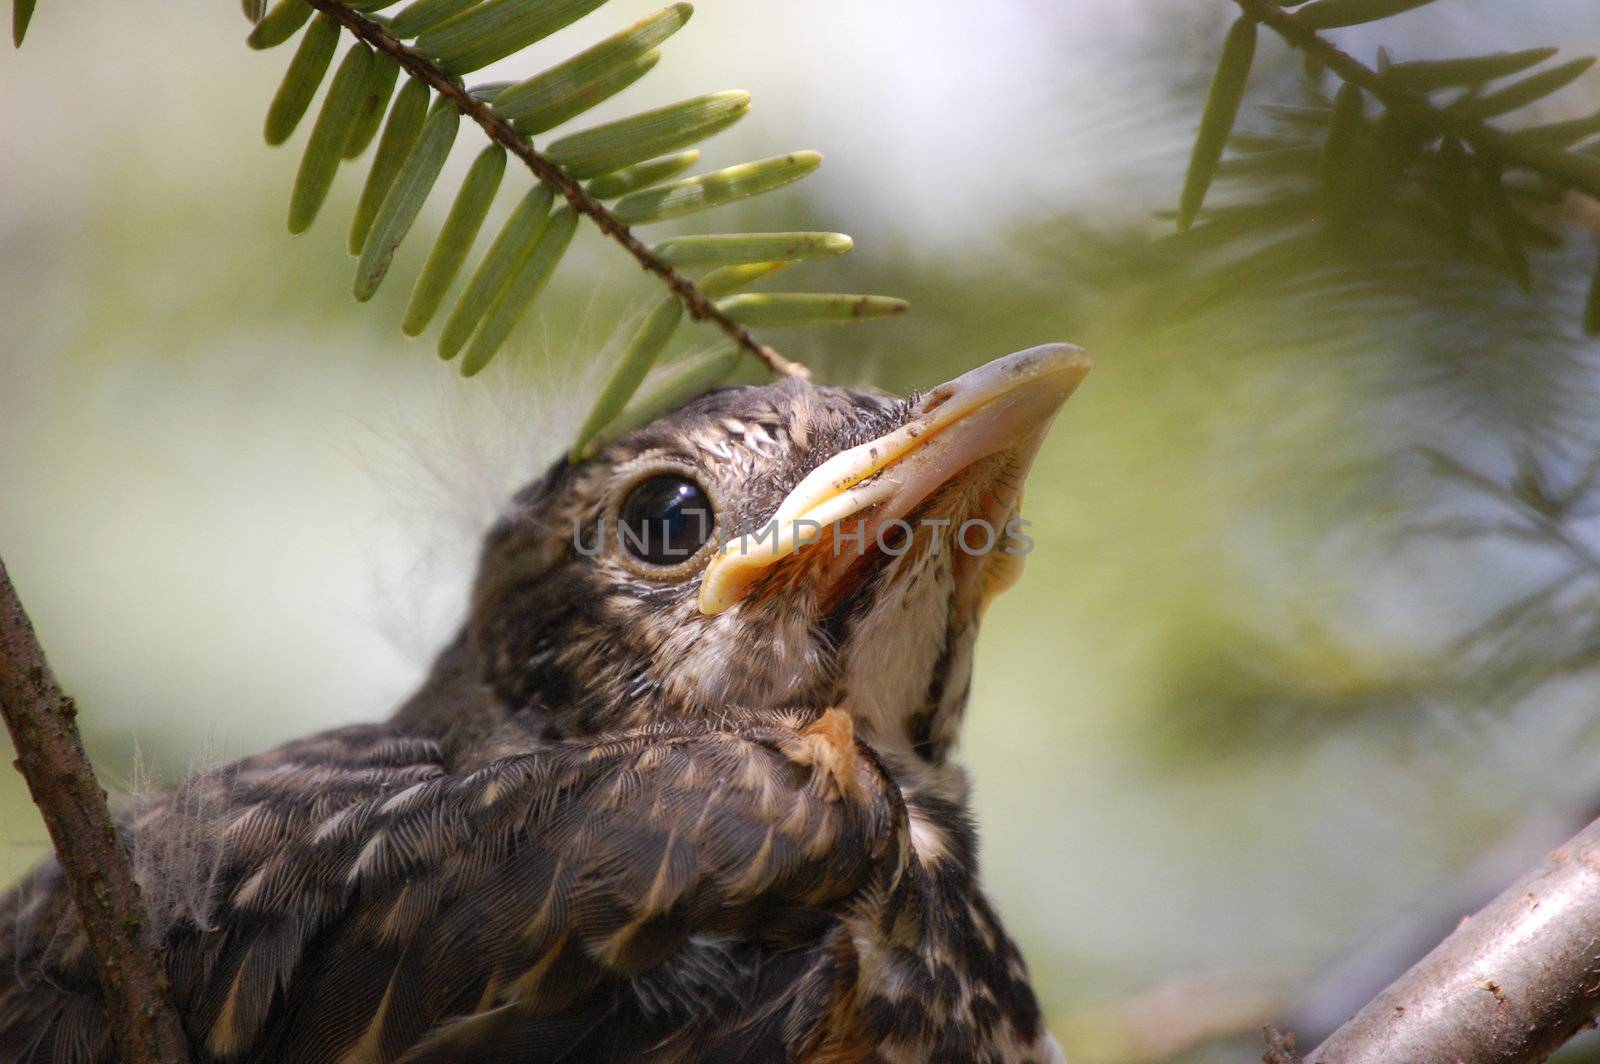 Baby bird closeup by RefocusPhoto